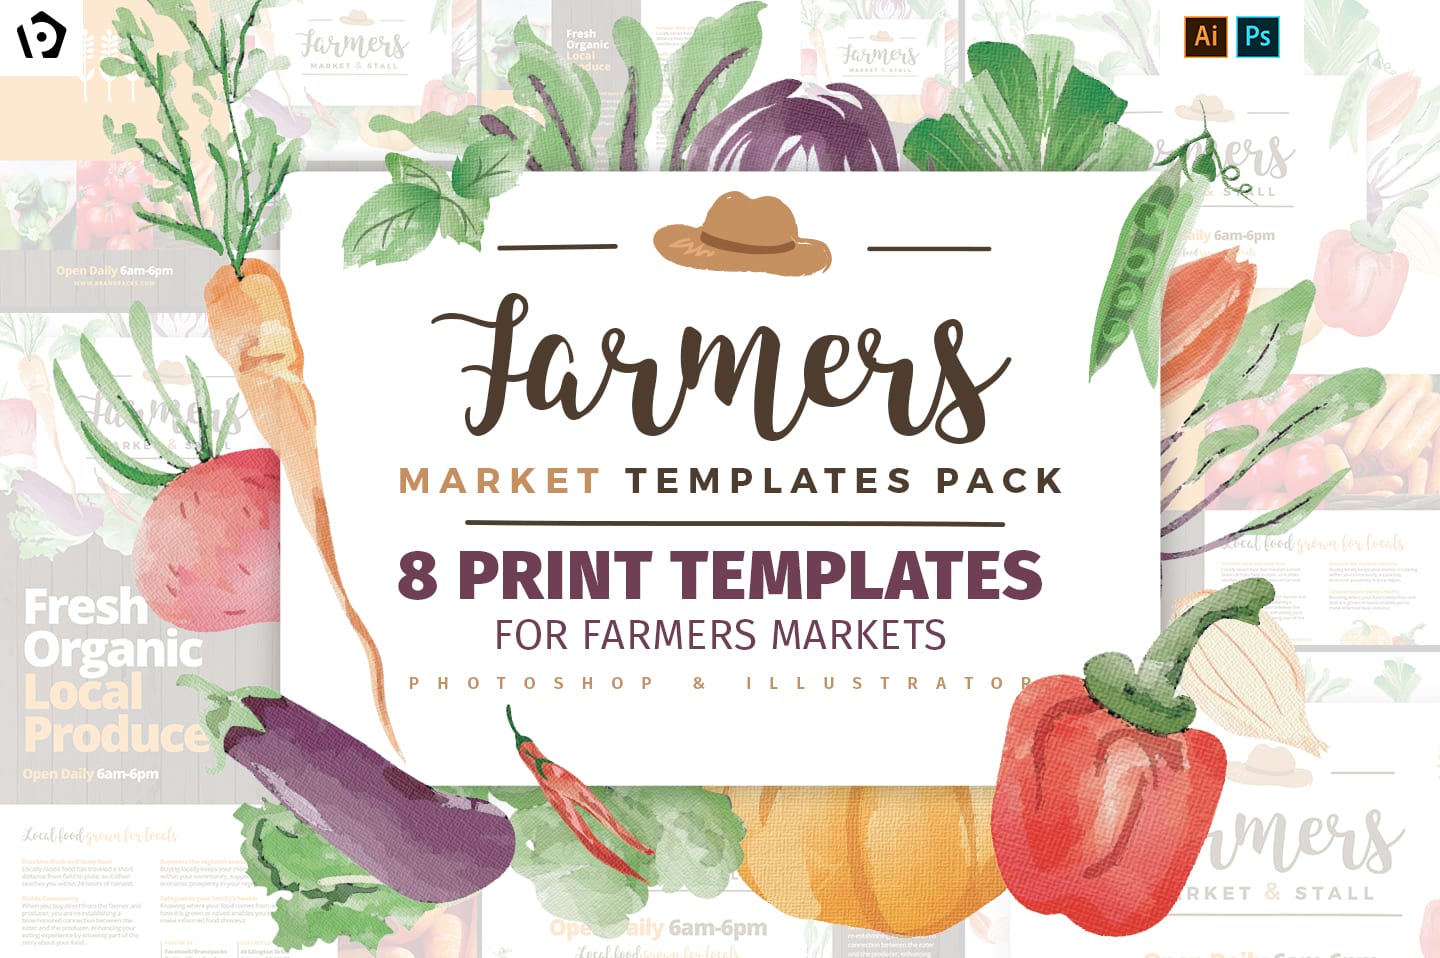 Farmers Market Templates Pack